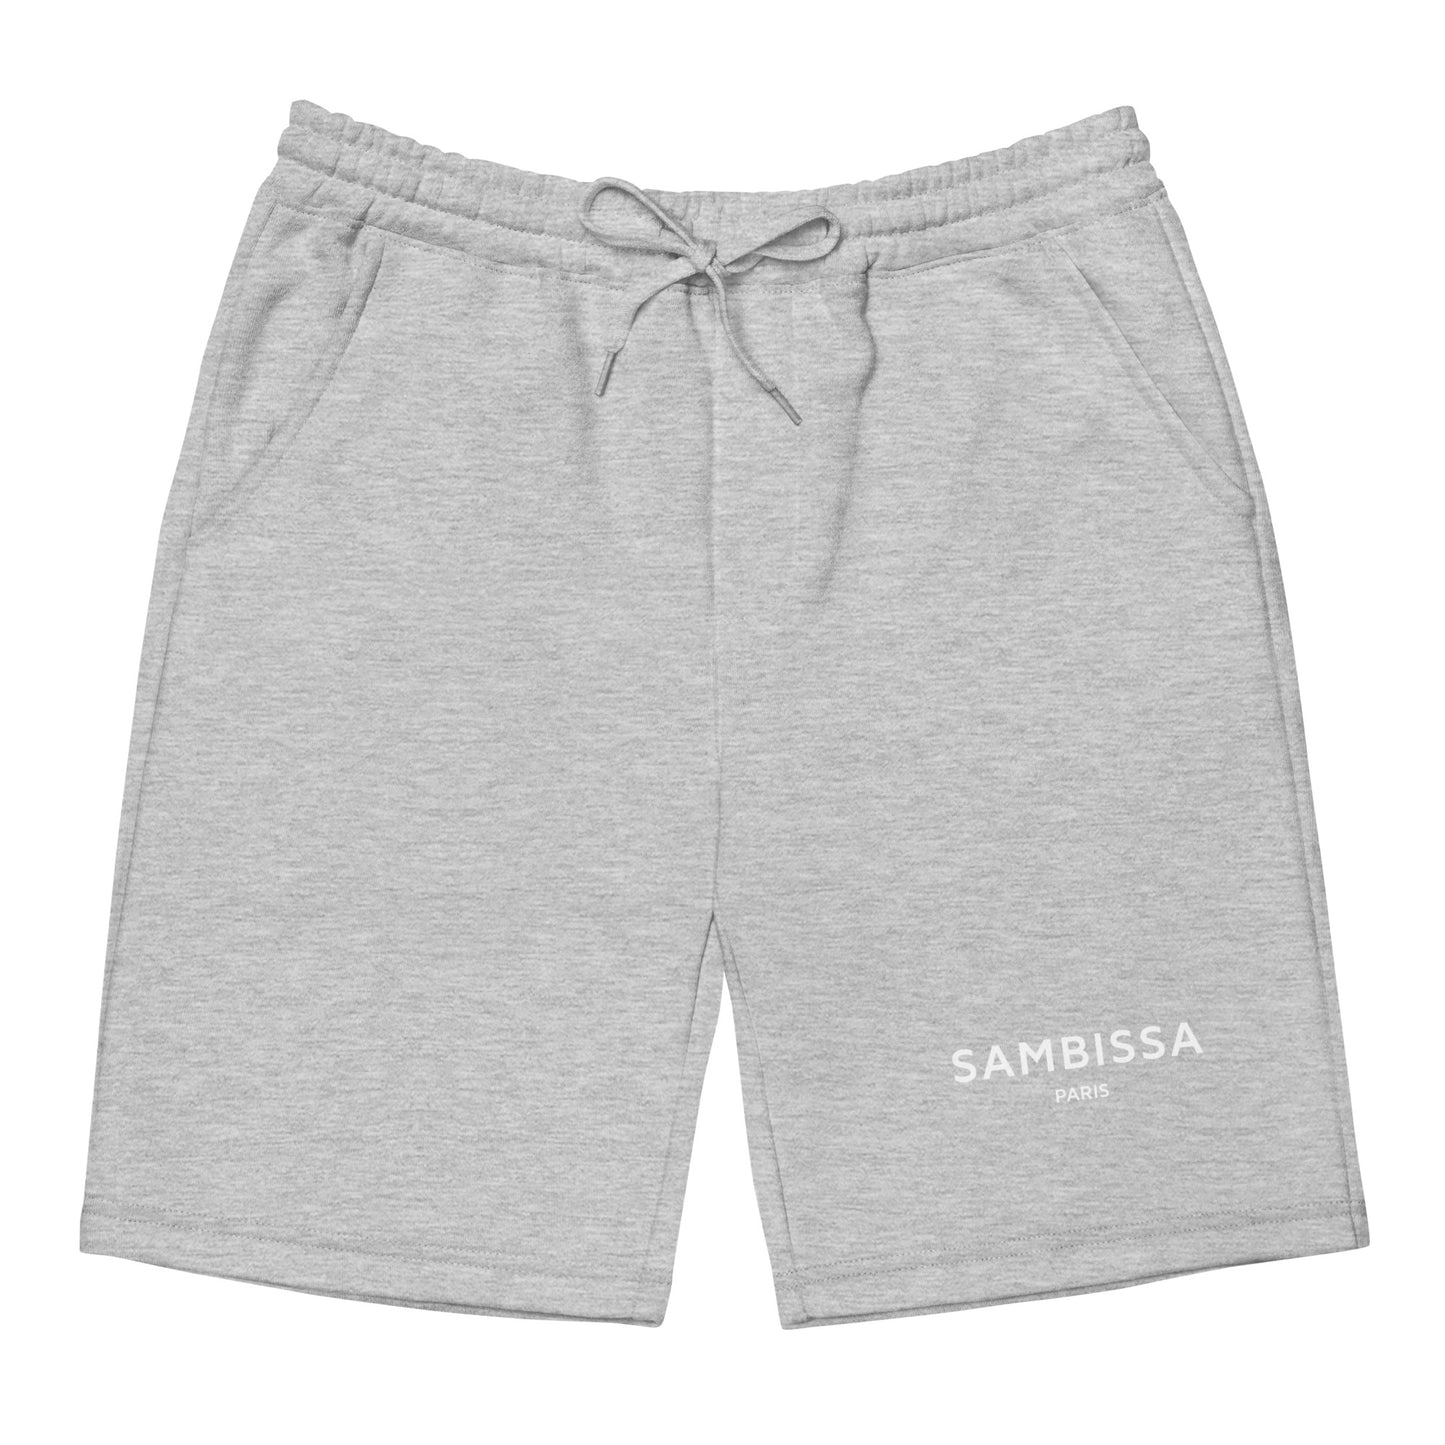 Sambissa shorts fleece cotton